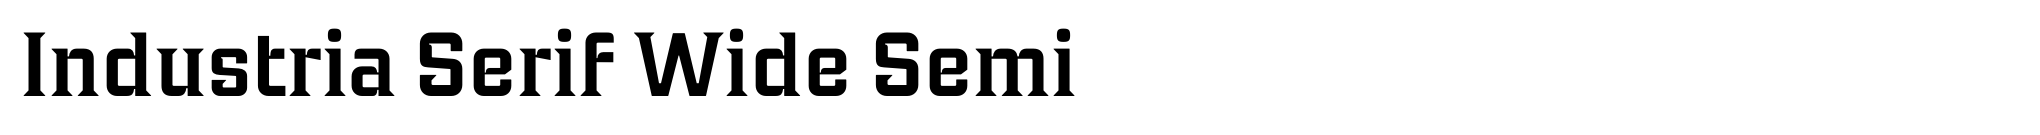 Industria Serif Wide Semi image